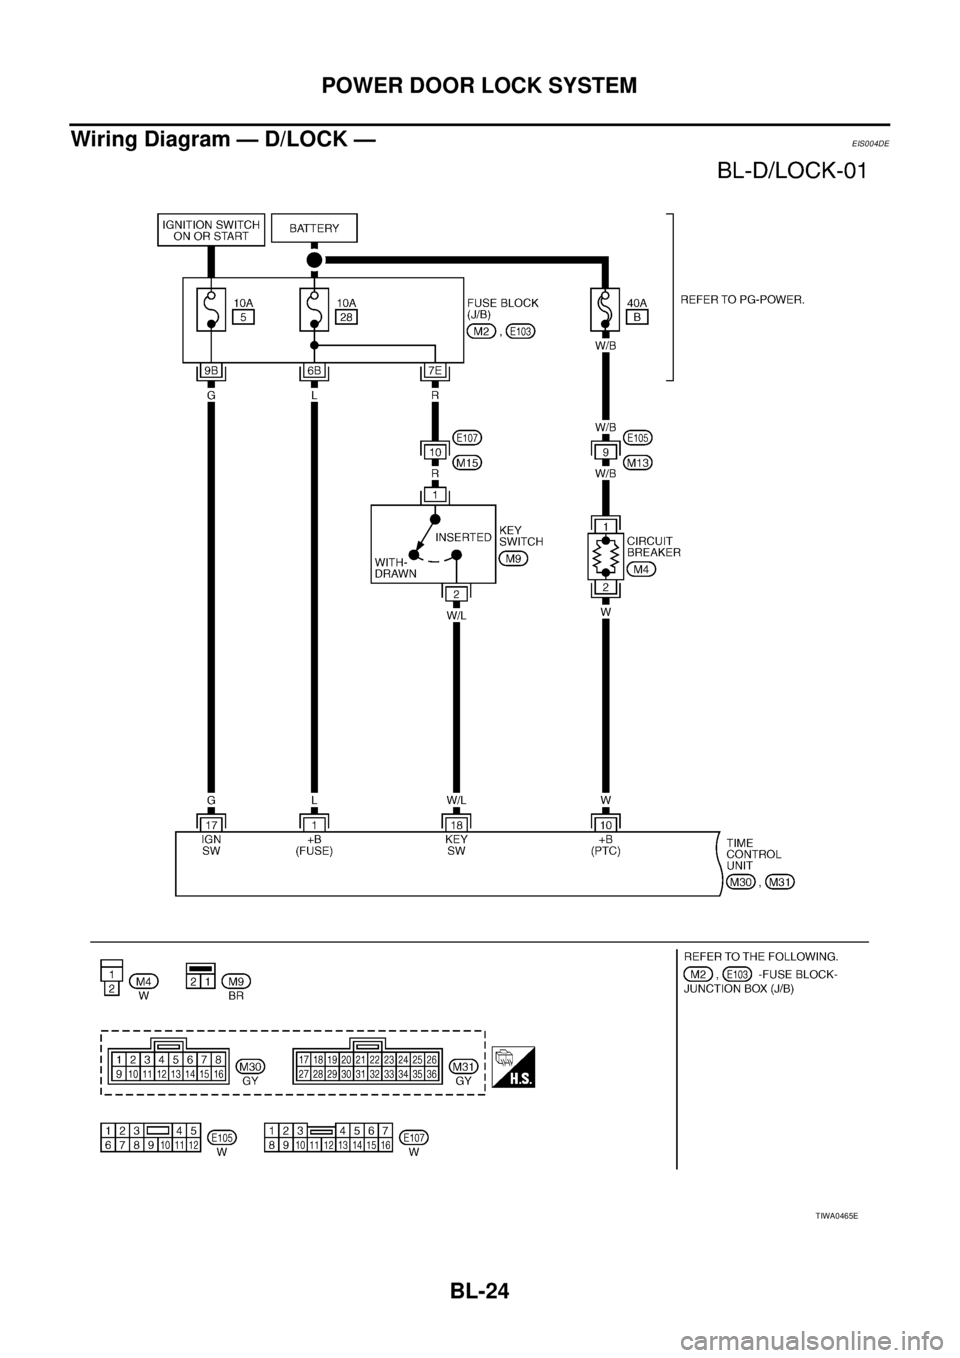 NISSAN X-TRAIL 2003  Service Repair Manual BL-24
POWER DOOR LOCK SYSTEM
 
Wiring Diagram — D/LOCK —EIS004DE
TIWA0465E 